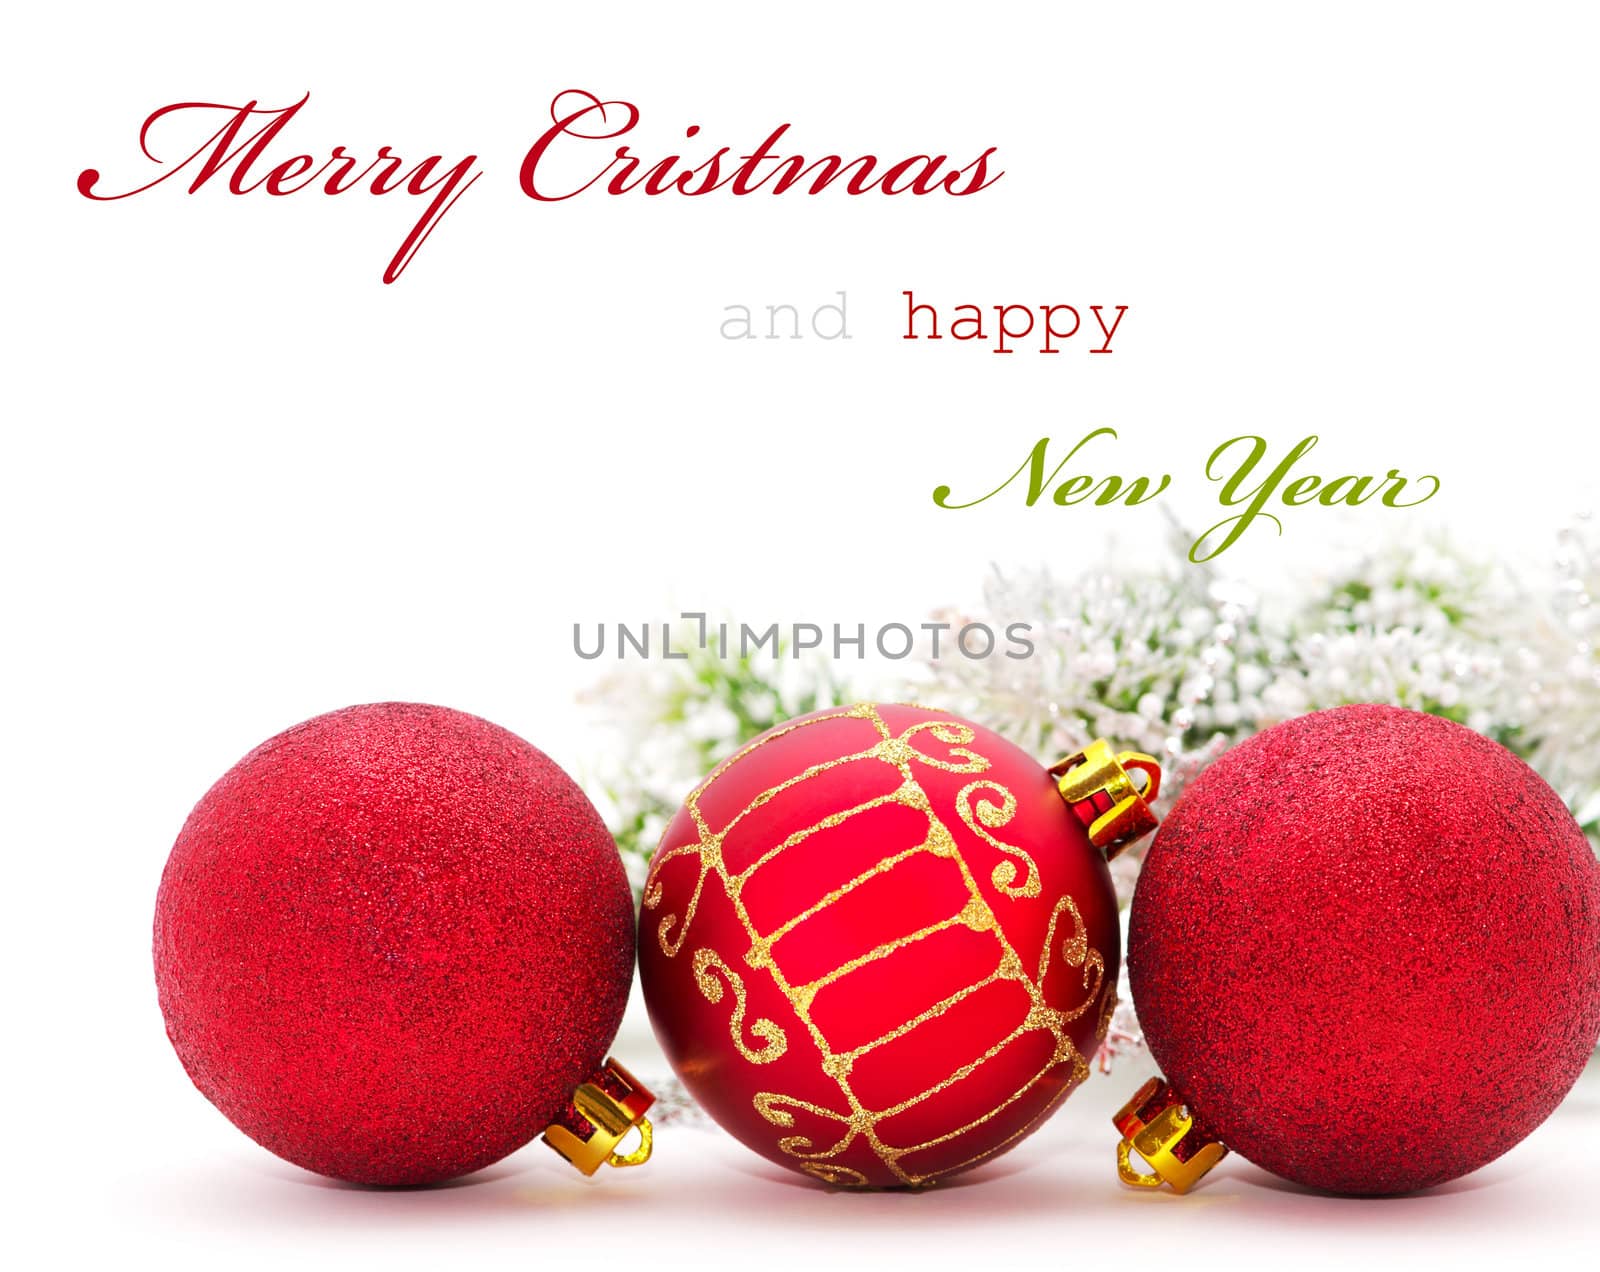 Christmas greeting card by Olinkau